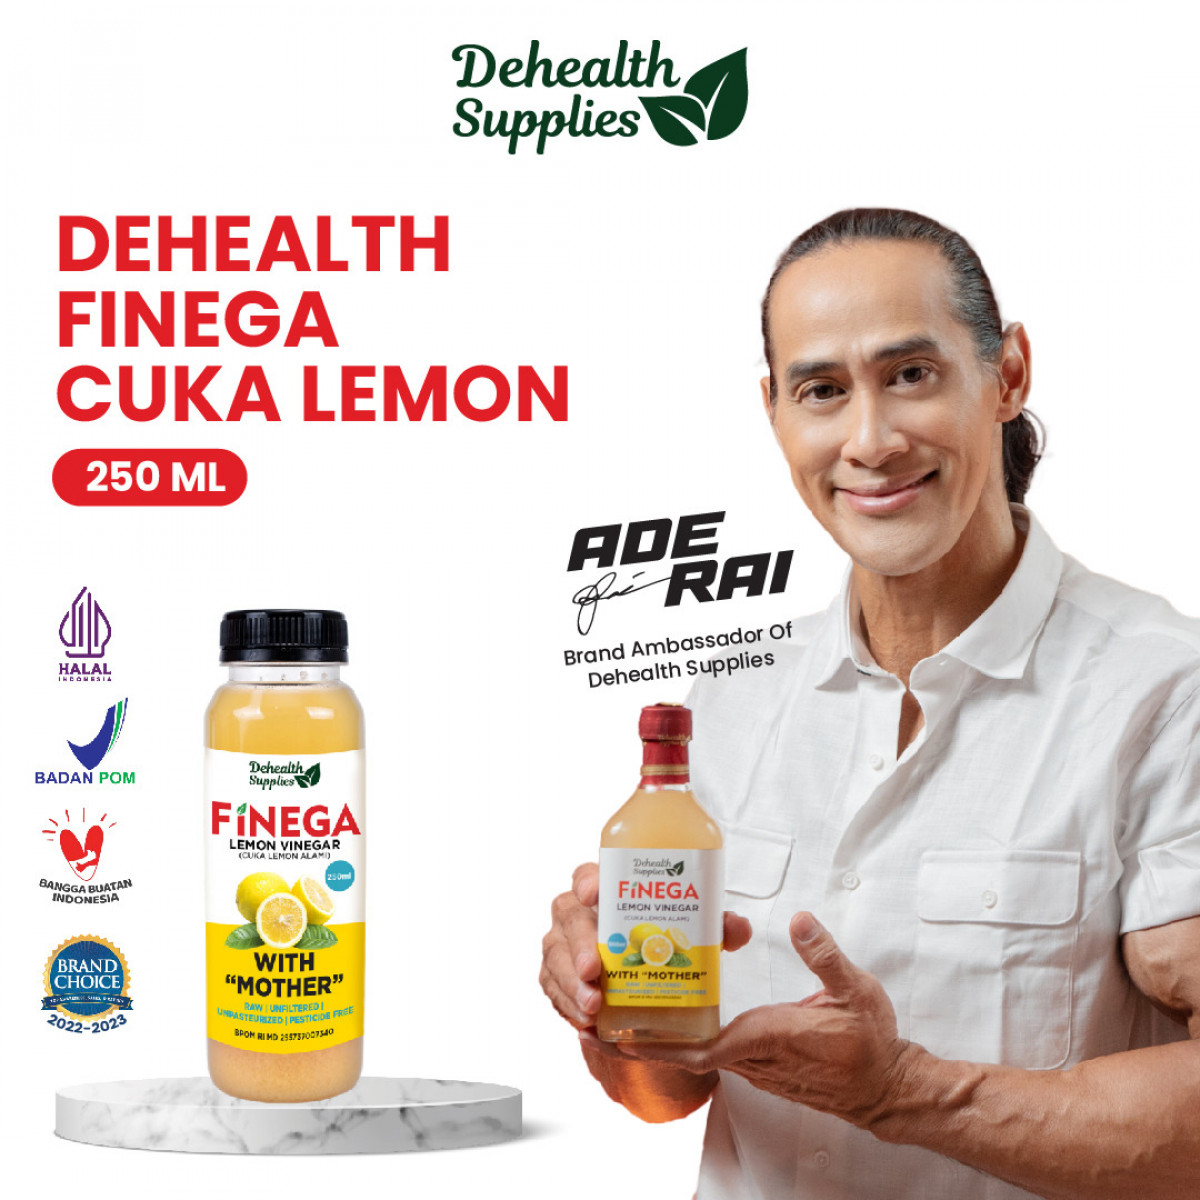 Dehealth Supplies Finega Cuka Lemon 250ml Kemasan Plastik